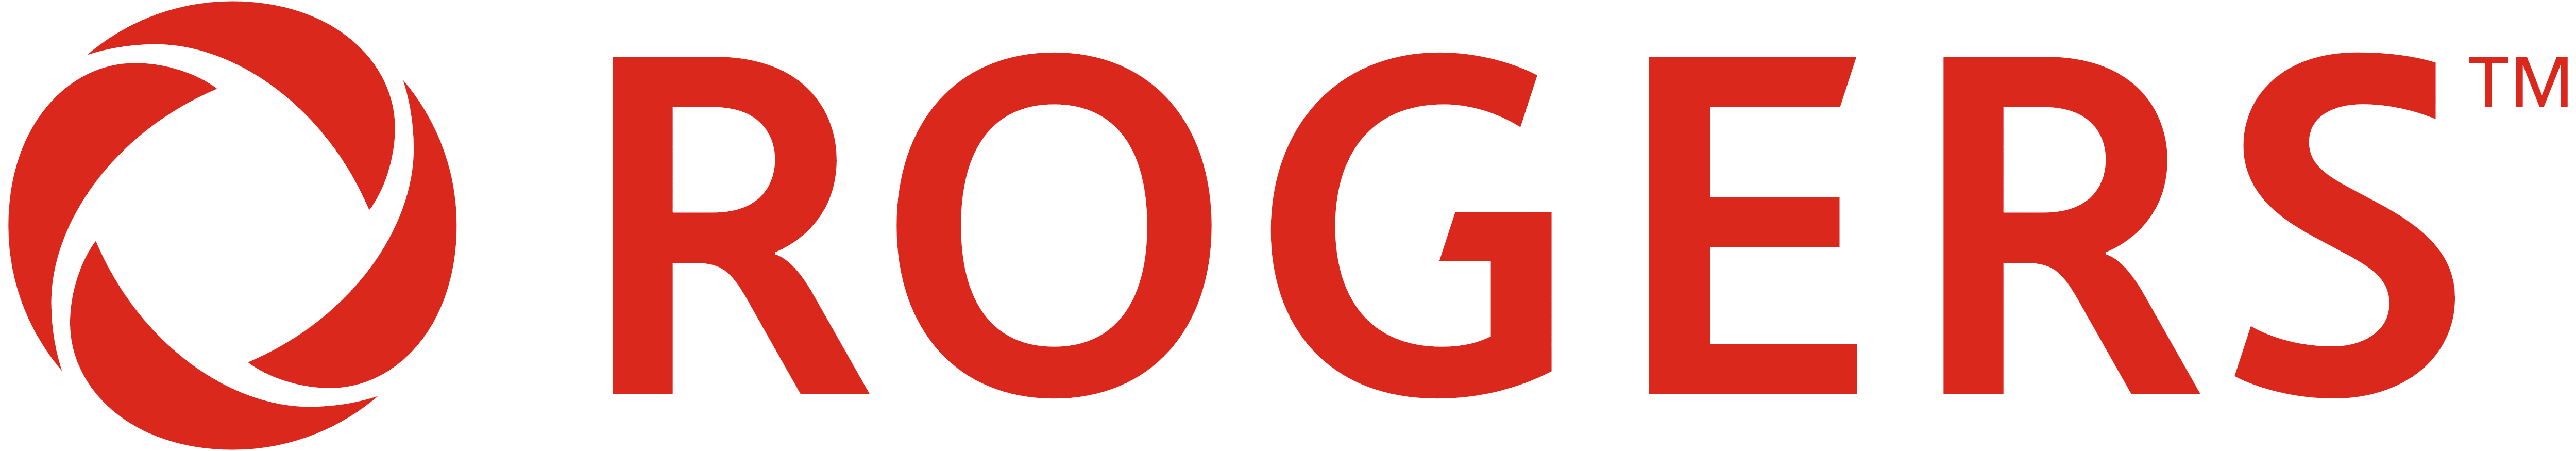 rogers wireless logo, brighter version